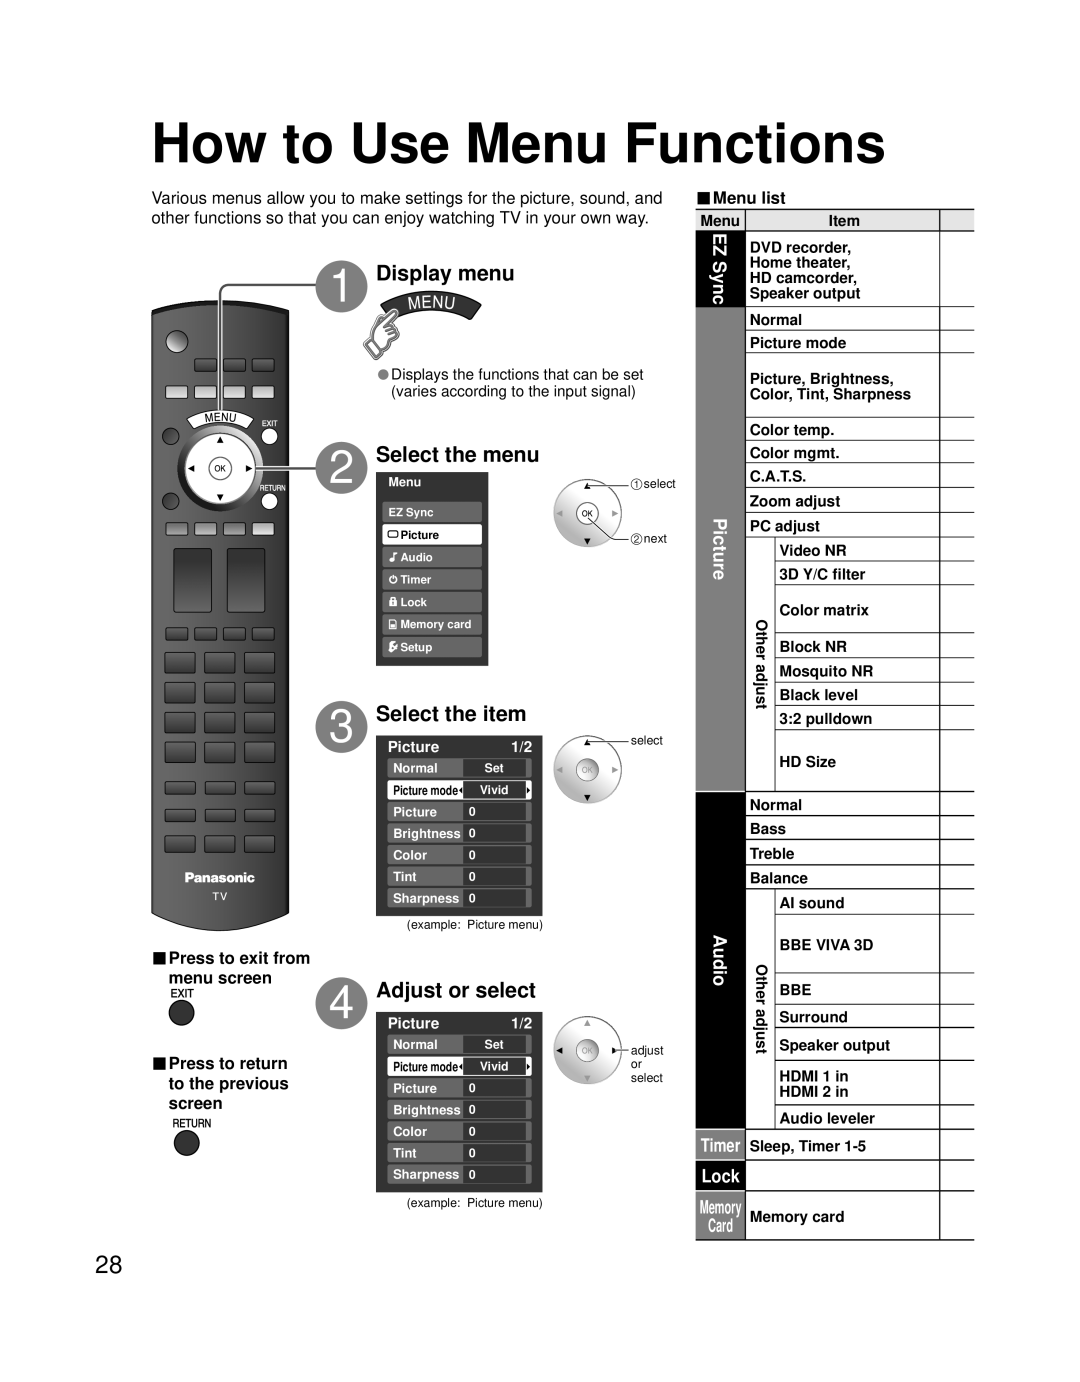 Panasonic TH 58PZ700U How to Use Menu Functions, Display menu, the menu, Select the item, Adjust or select, Sync, Picture 